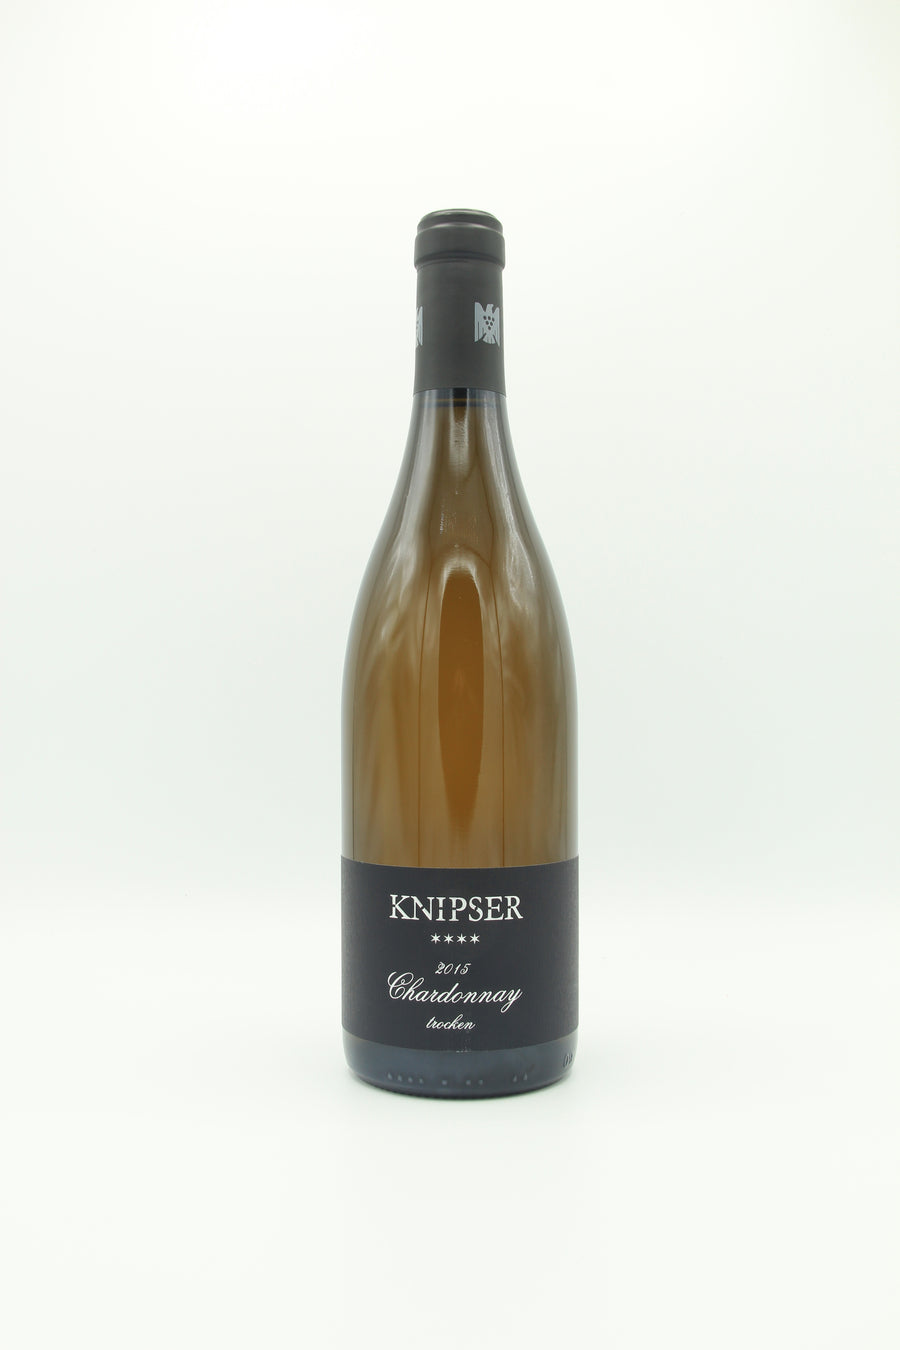 Knipser Chardonnay trocken ****